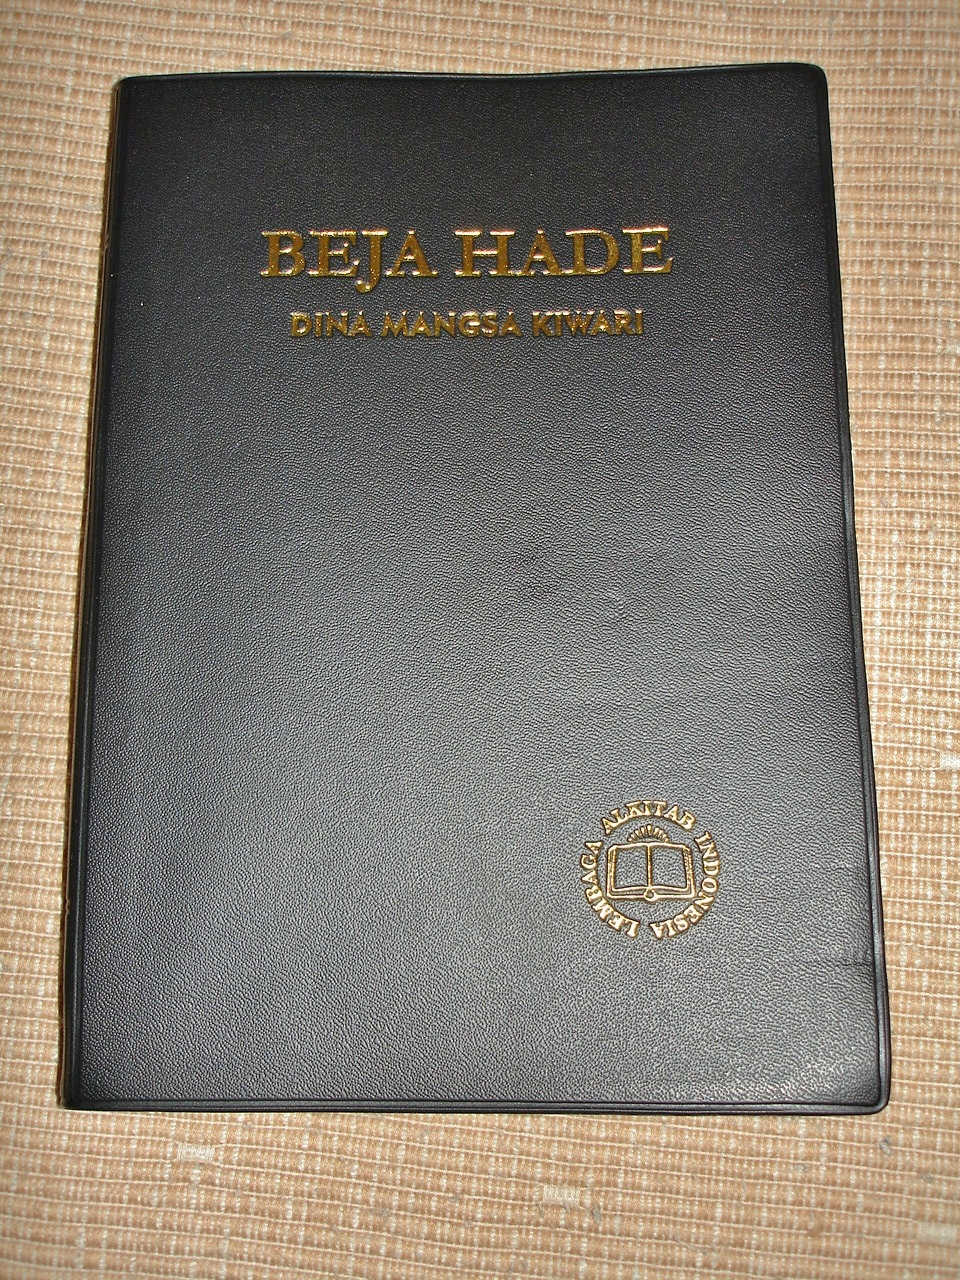 indonesian bible